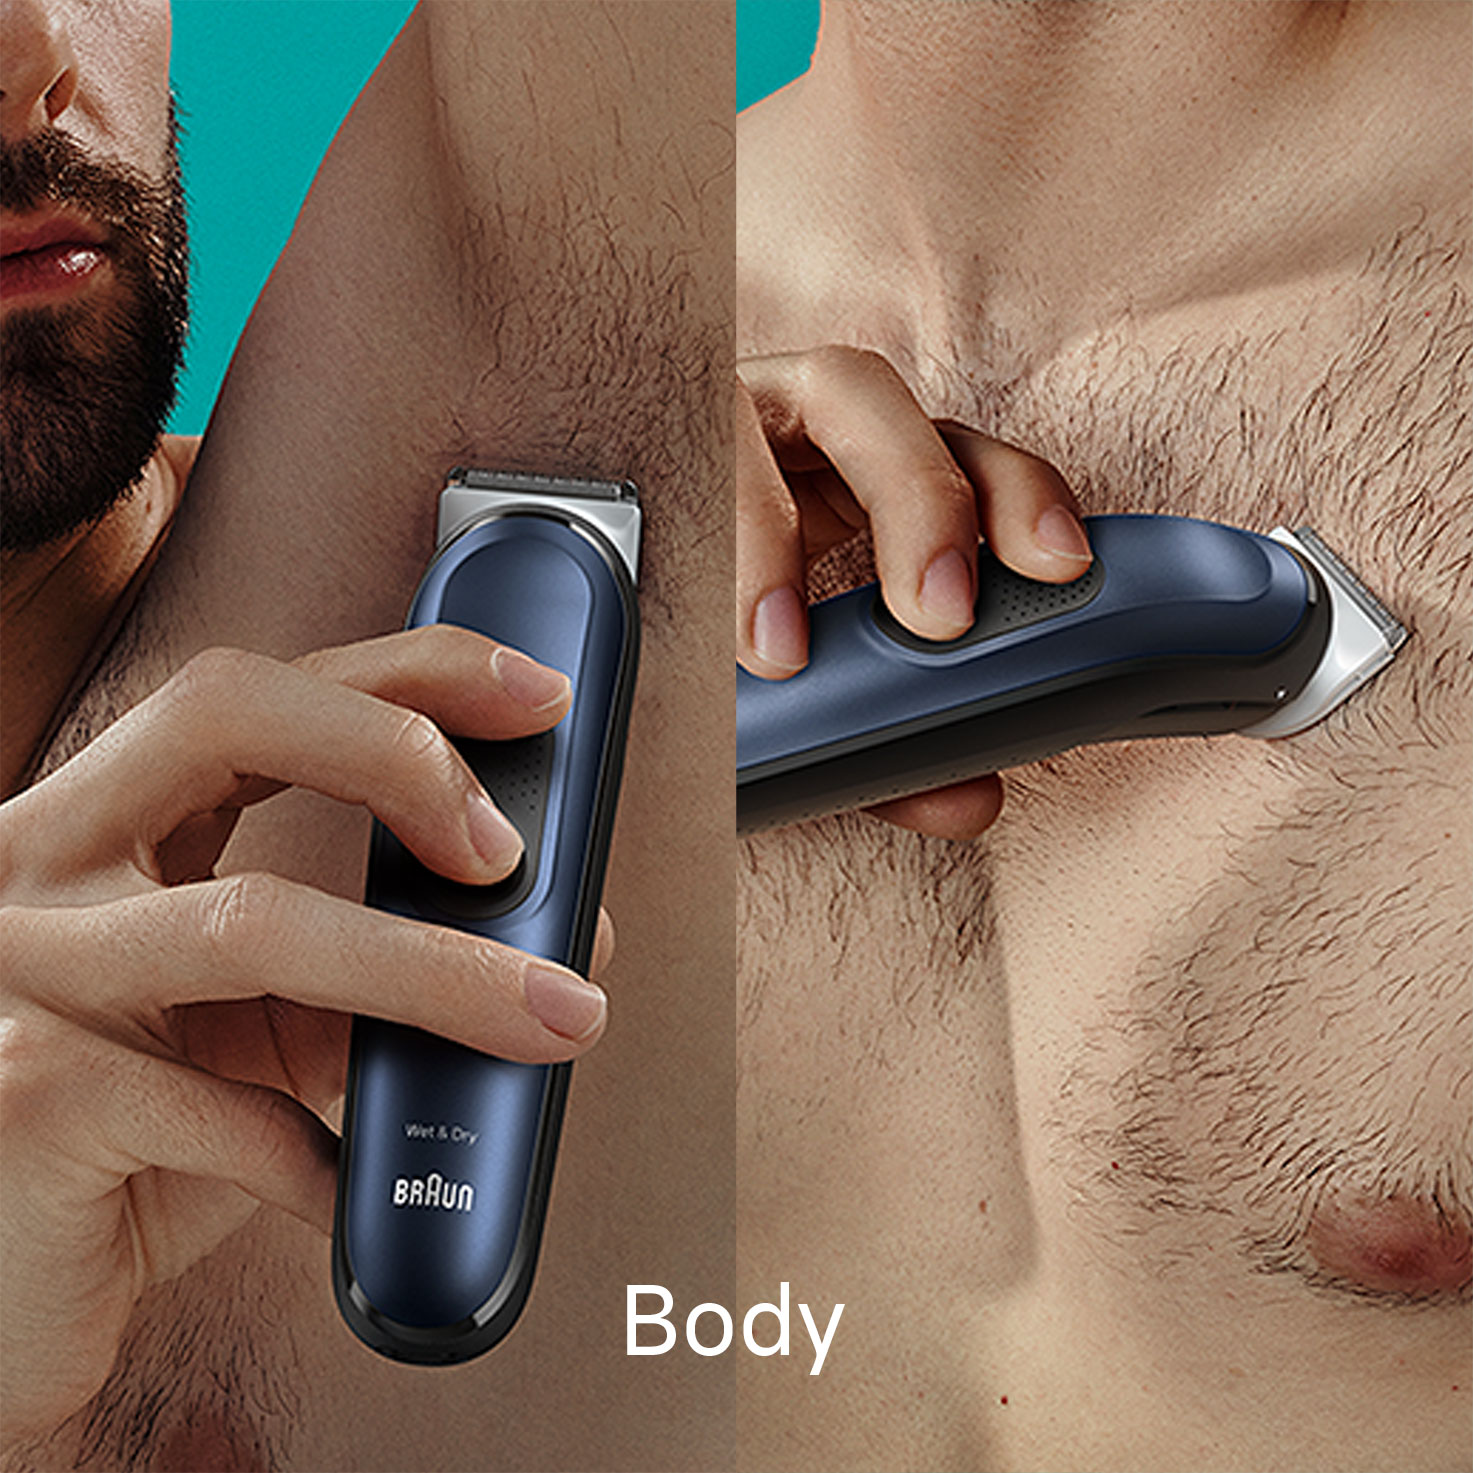 MGK 7410 : Braun's all in one male body grooming kit | Braun SG